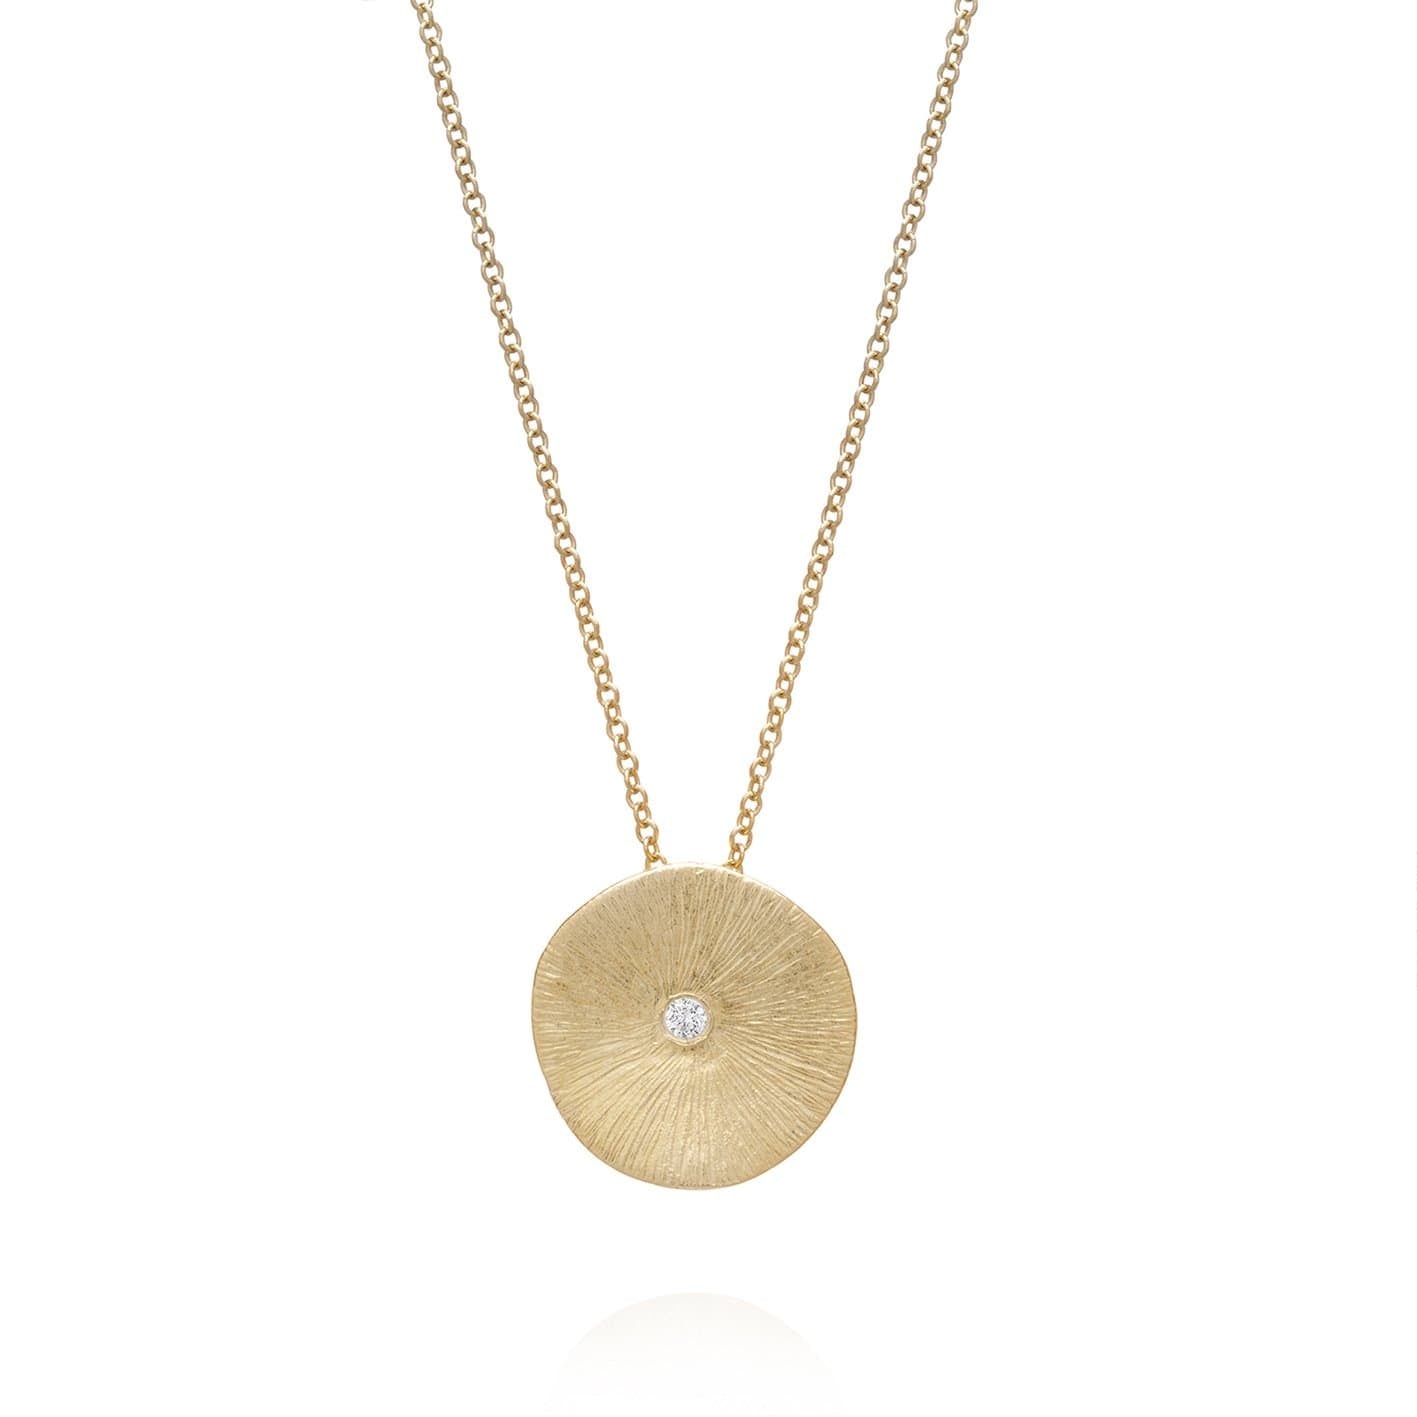 Dalia T Necklace Signature Collection 14KT YG Medium Textured Circle Pendant Necklace with Diamonds